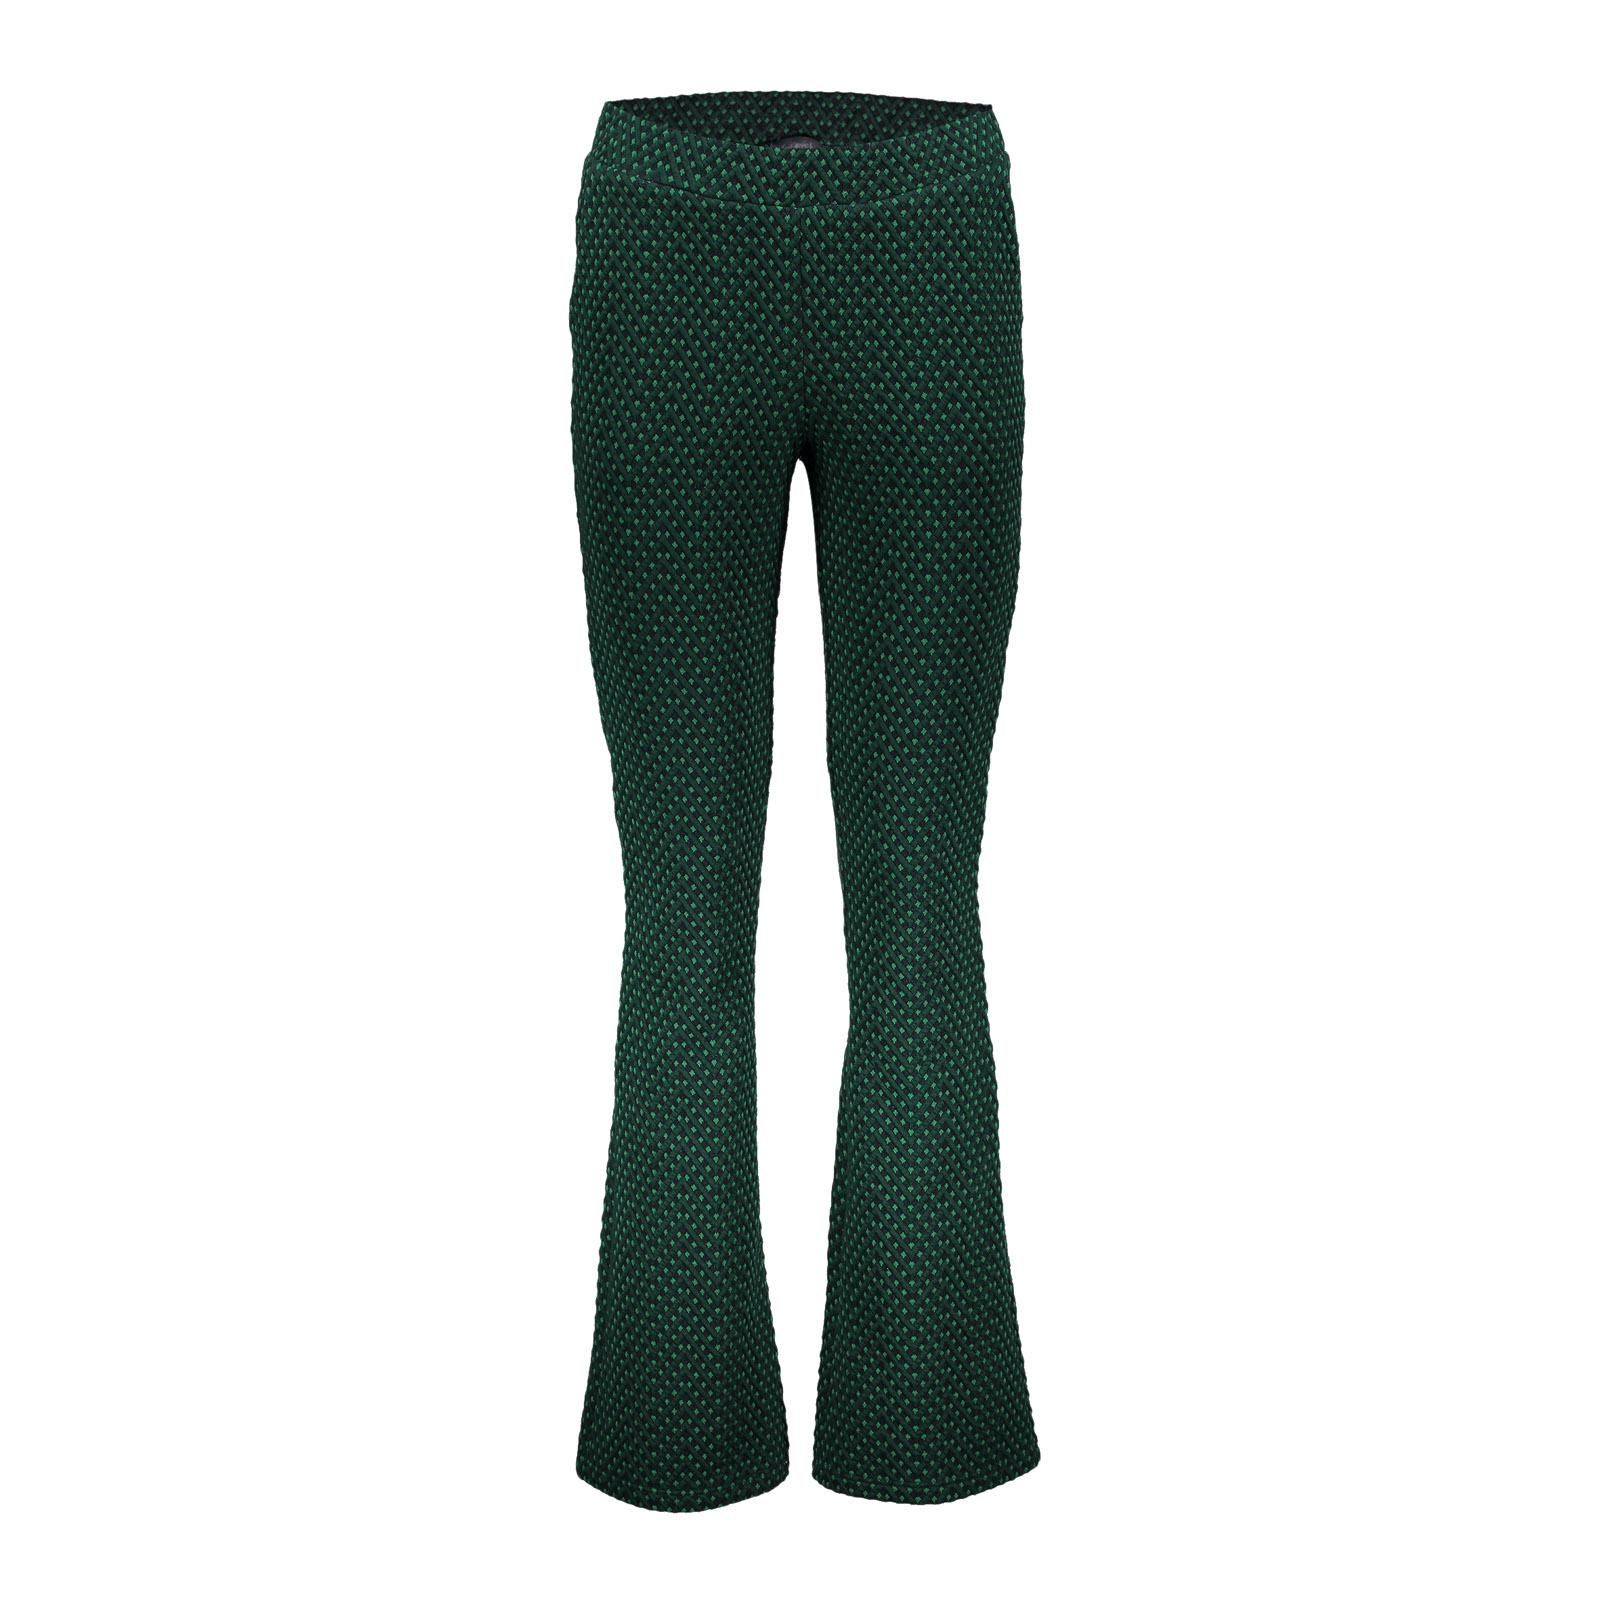 geisha Pants 530 green/black combi 00104980-EKA26013800000026